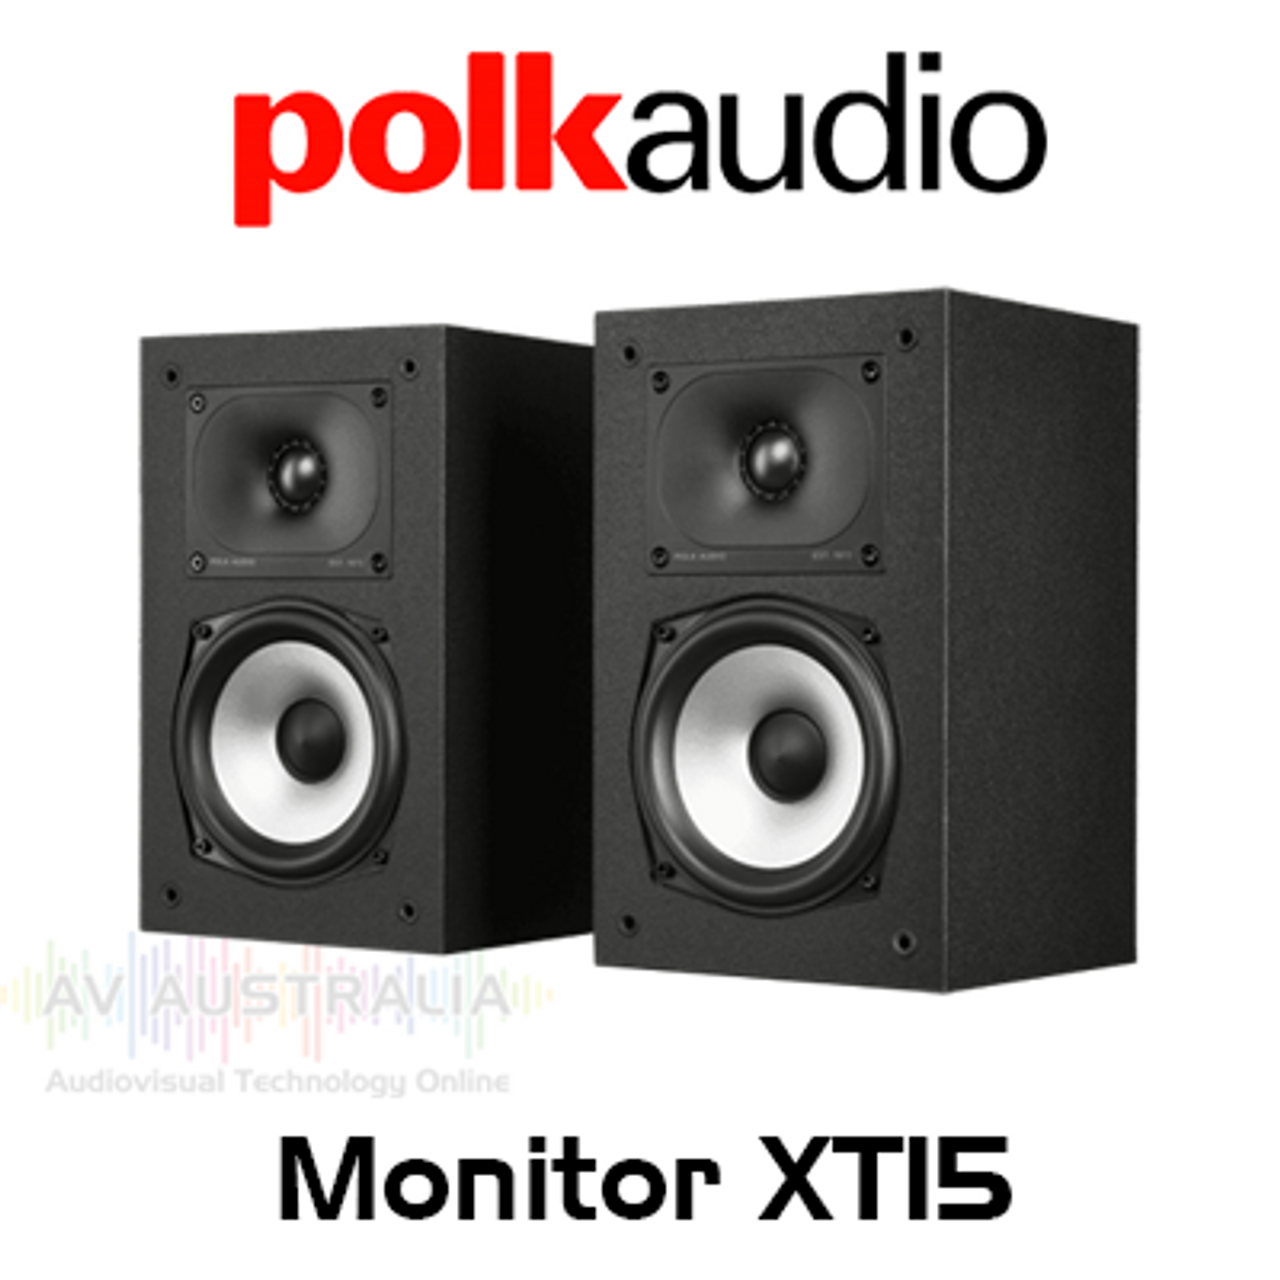 Polk Audio Monitor XT15 5.25" Bookshelf Speakers (Pair)